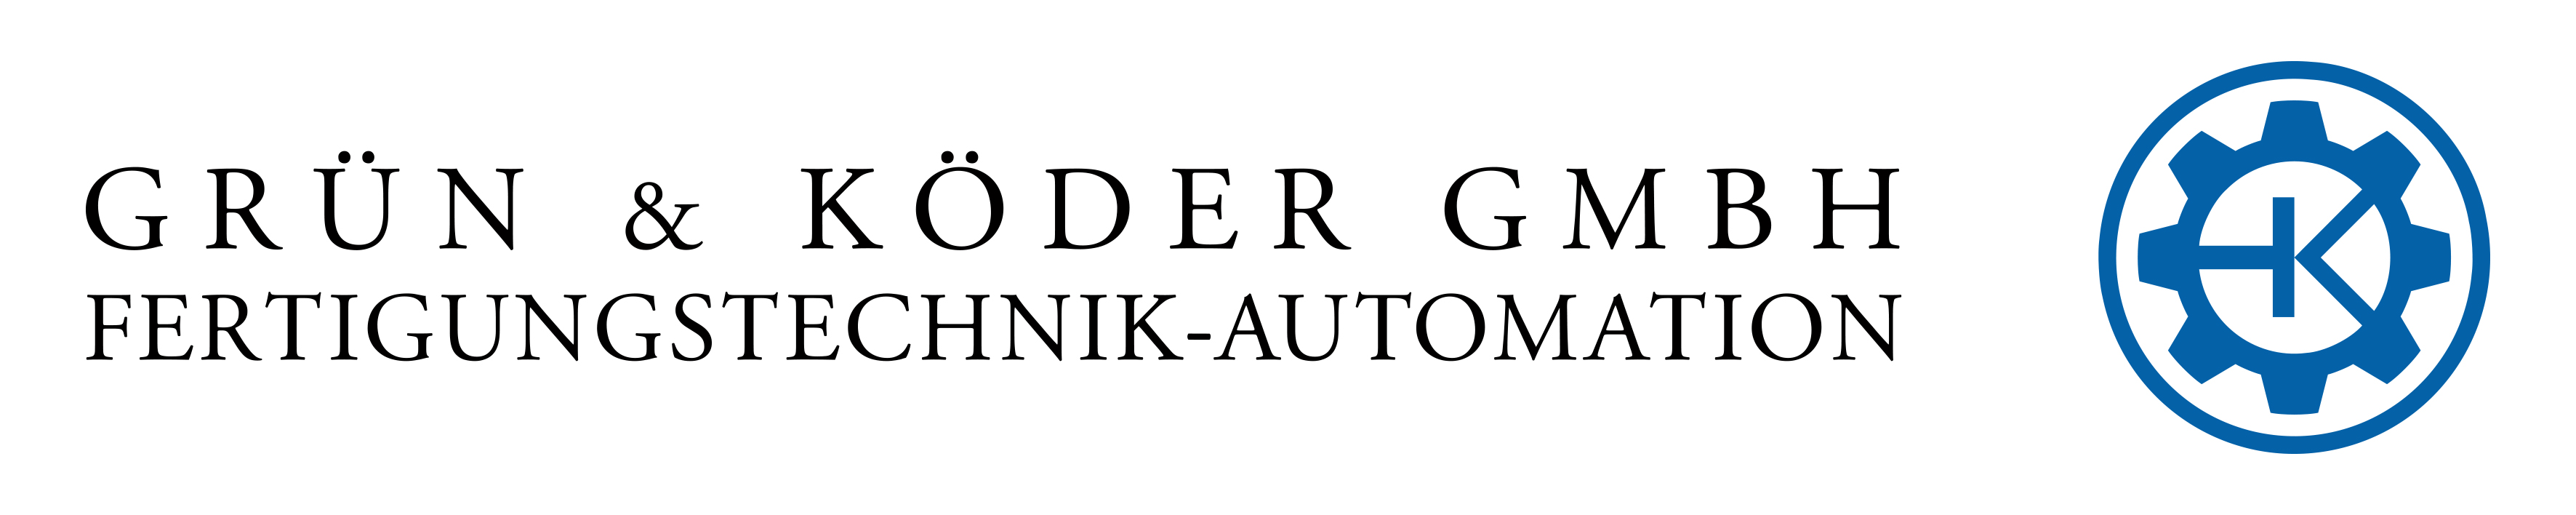 Grün & Köder GmbH Logo